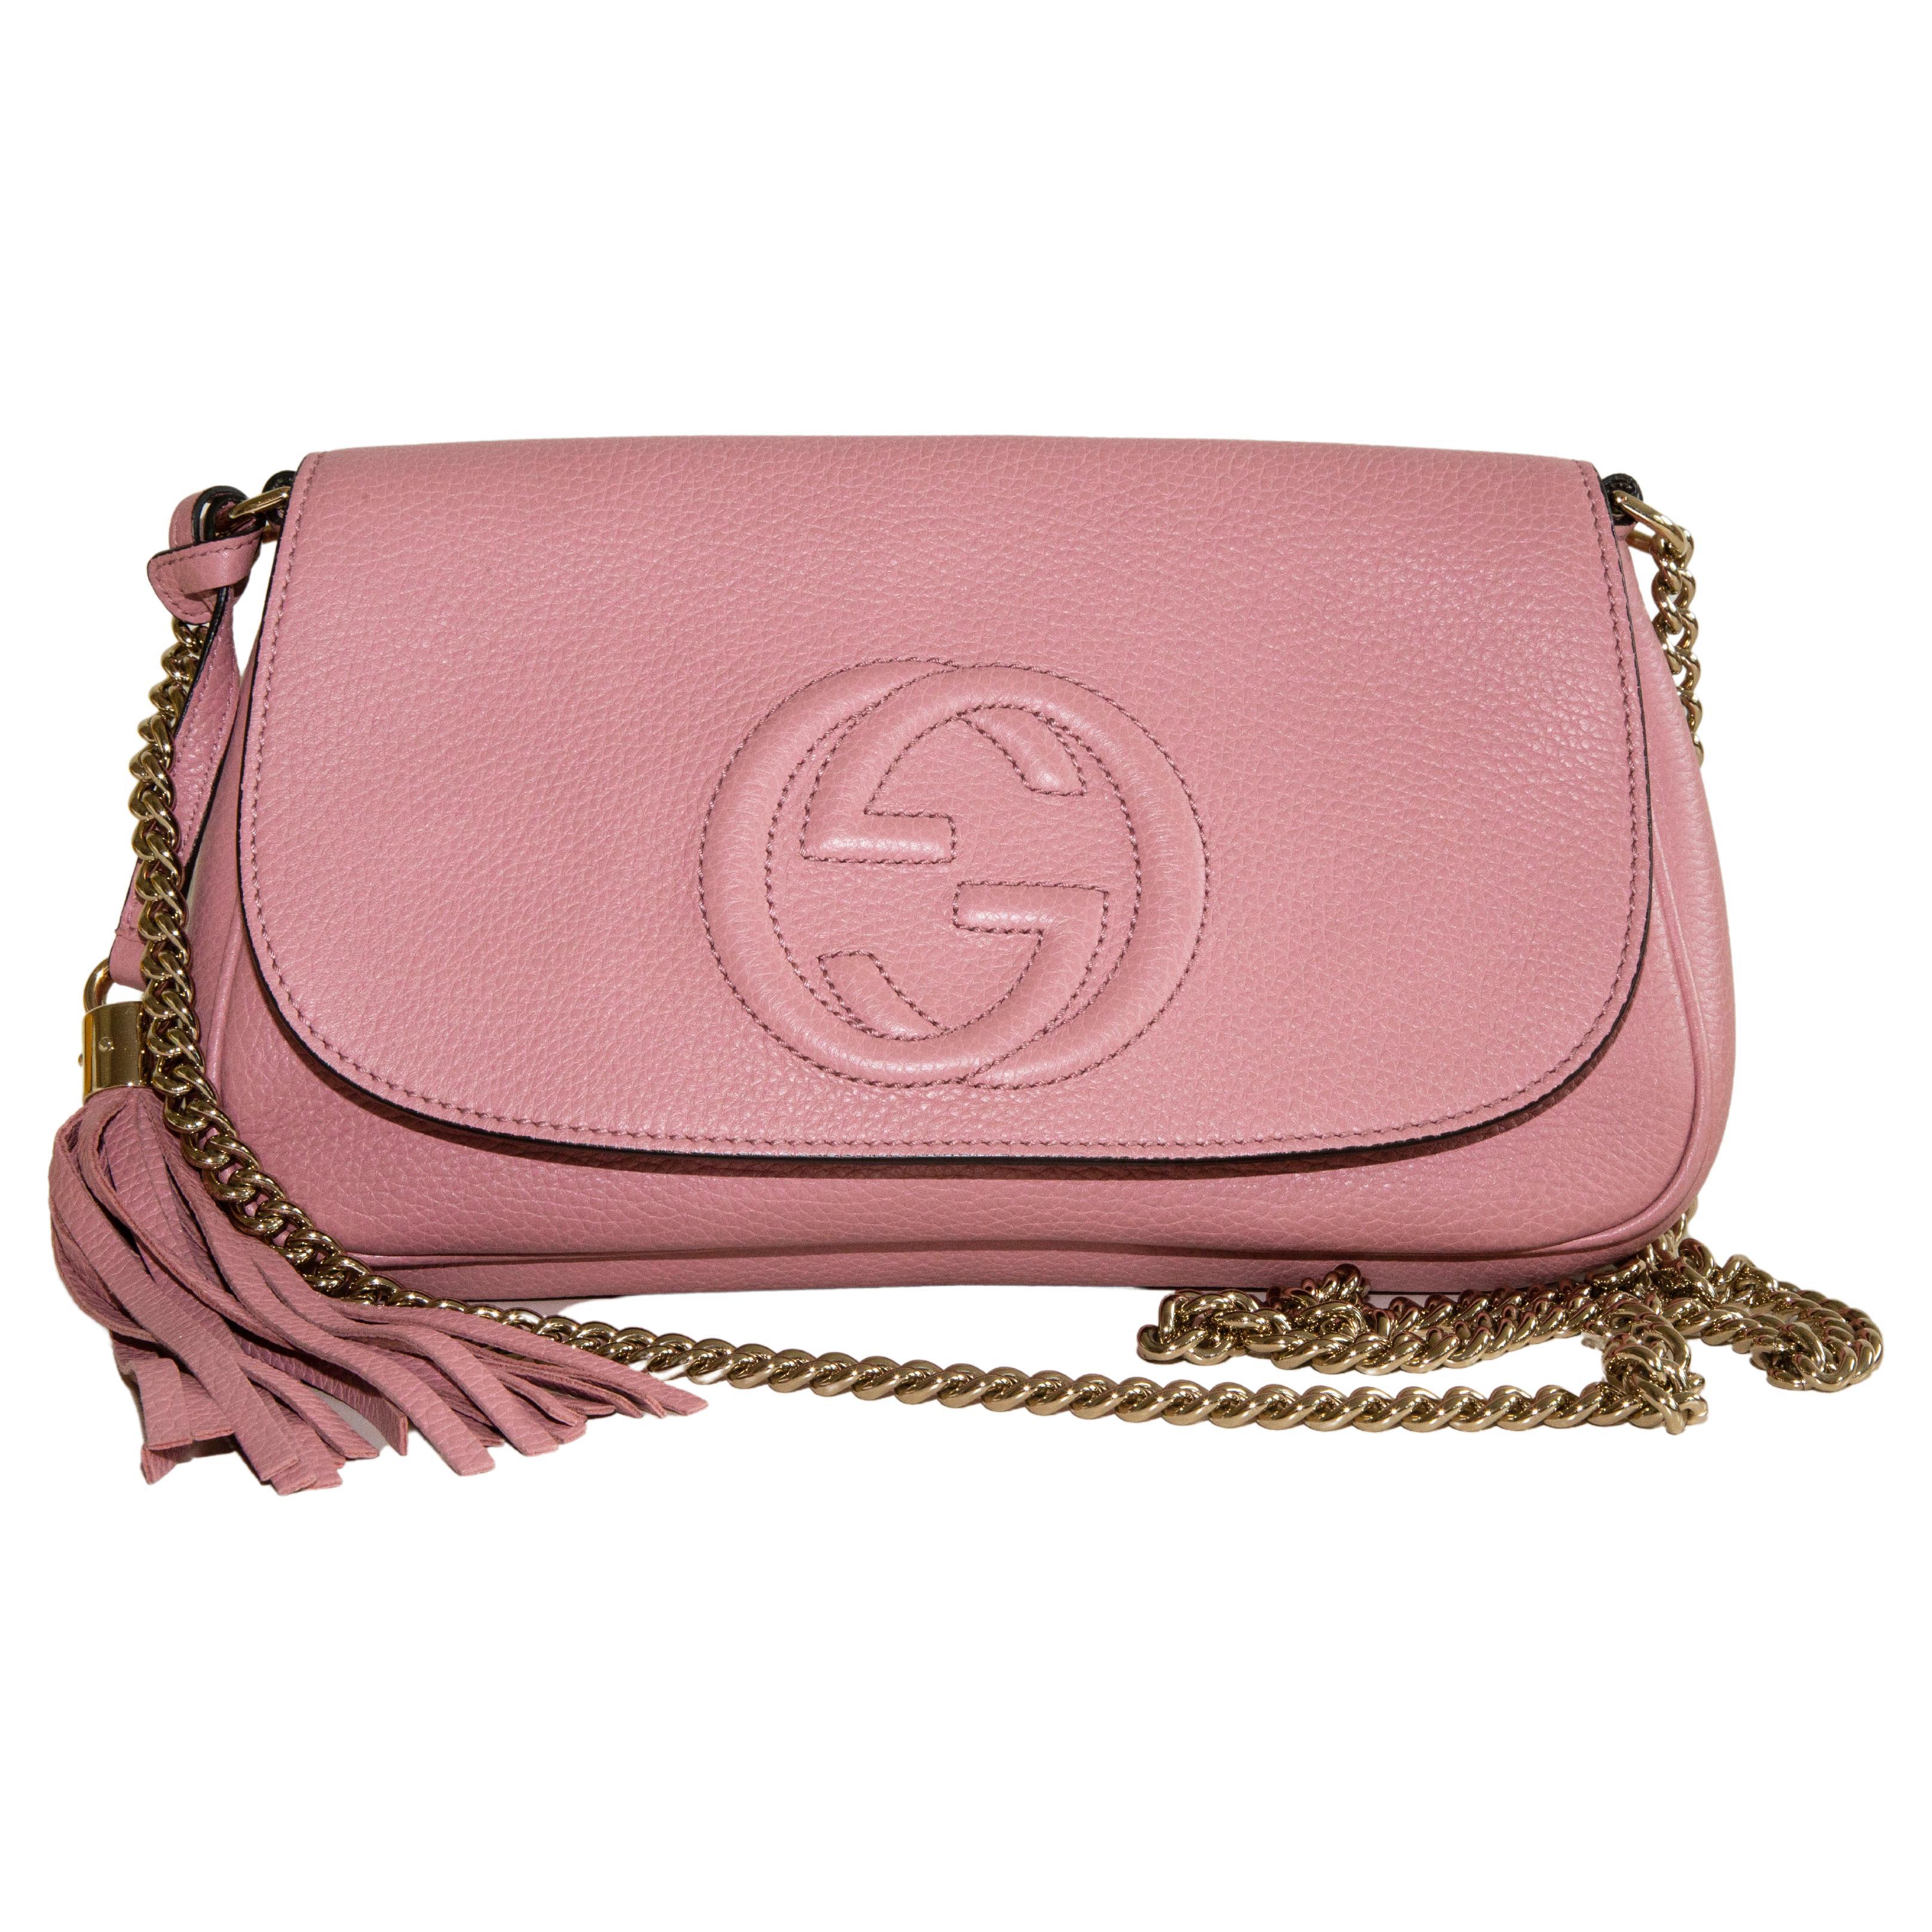 Gucci Soho Pink Leather Crossbody Bag